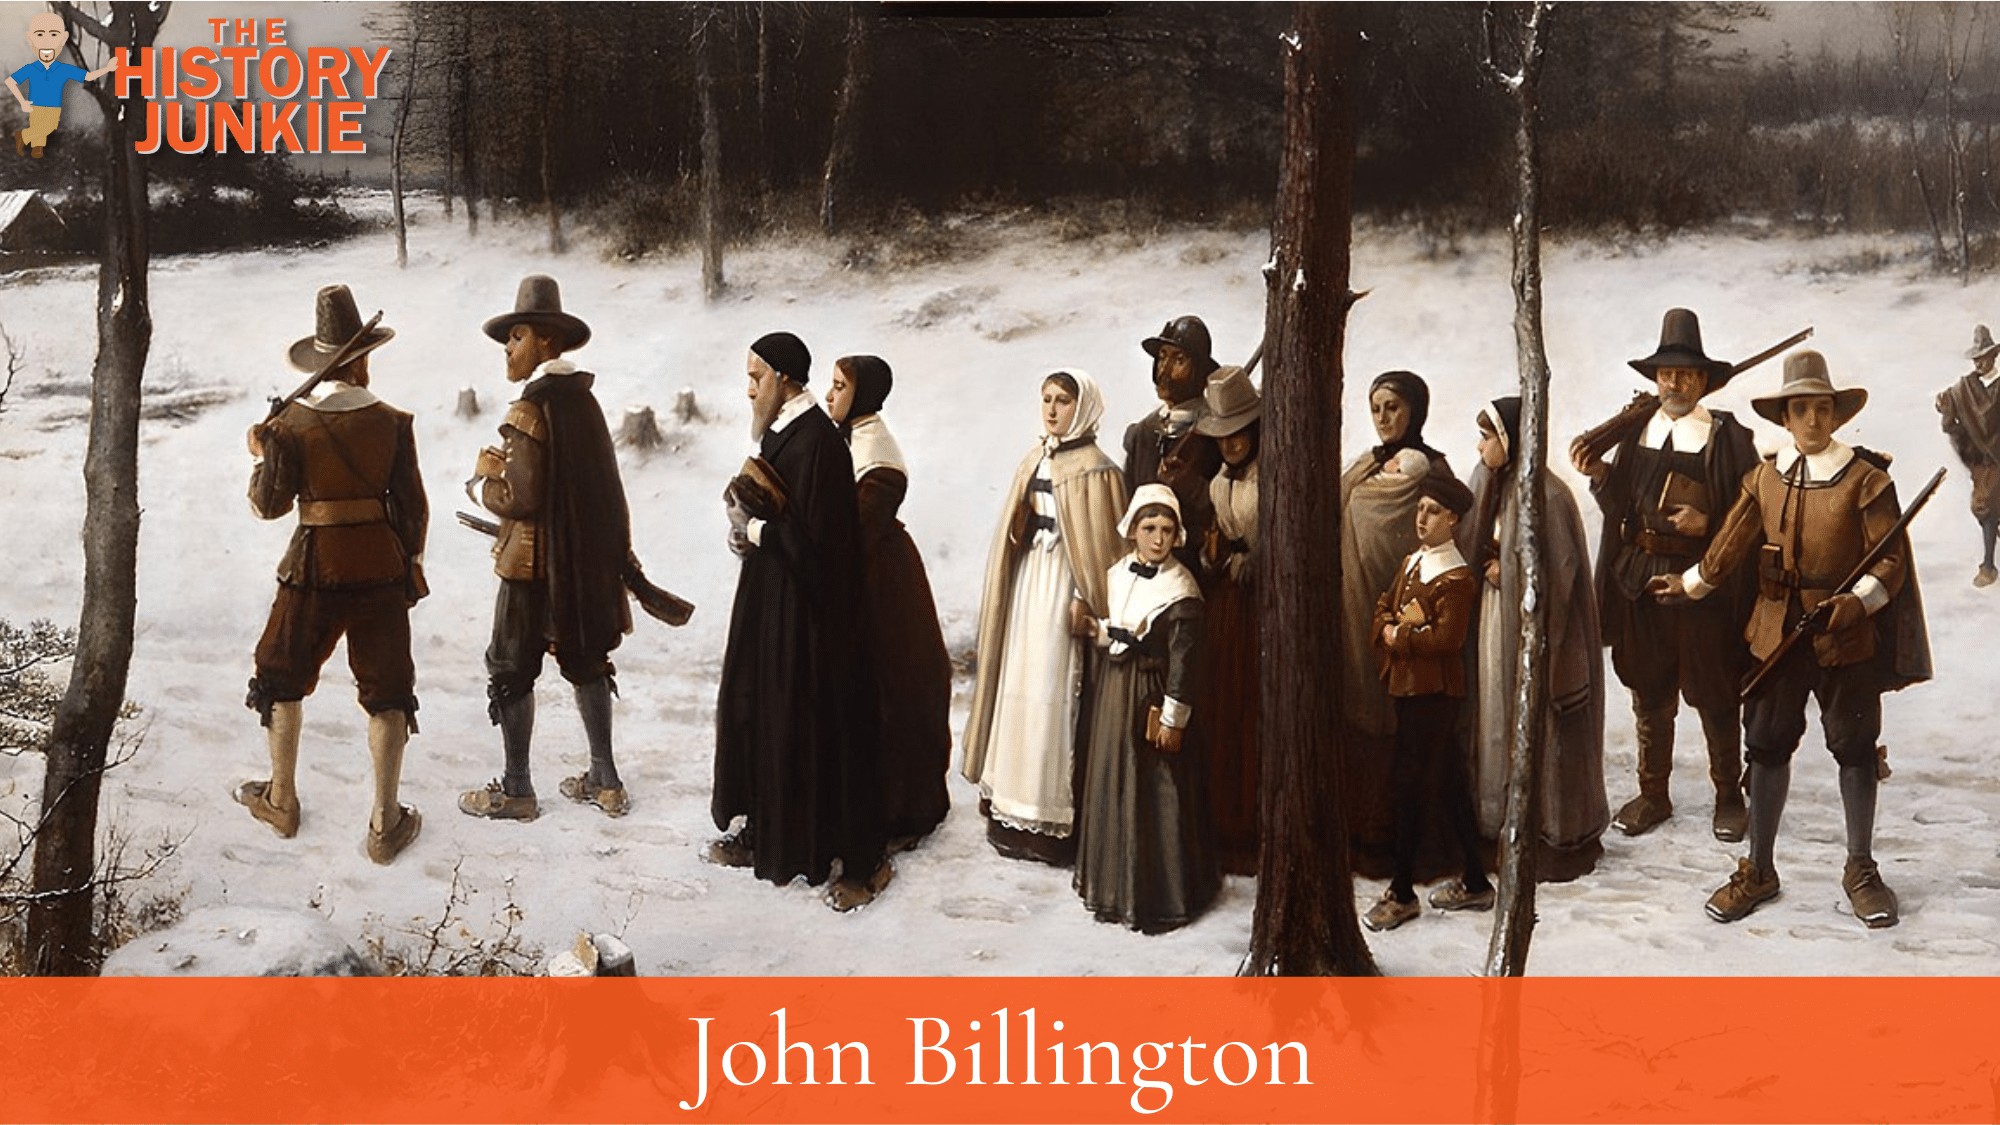 John Billington